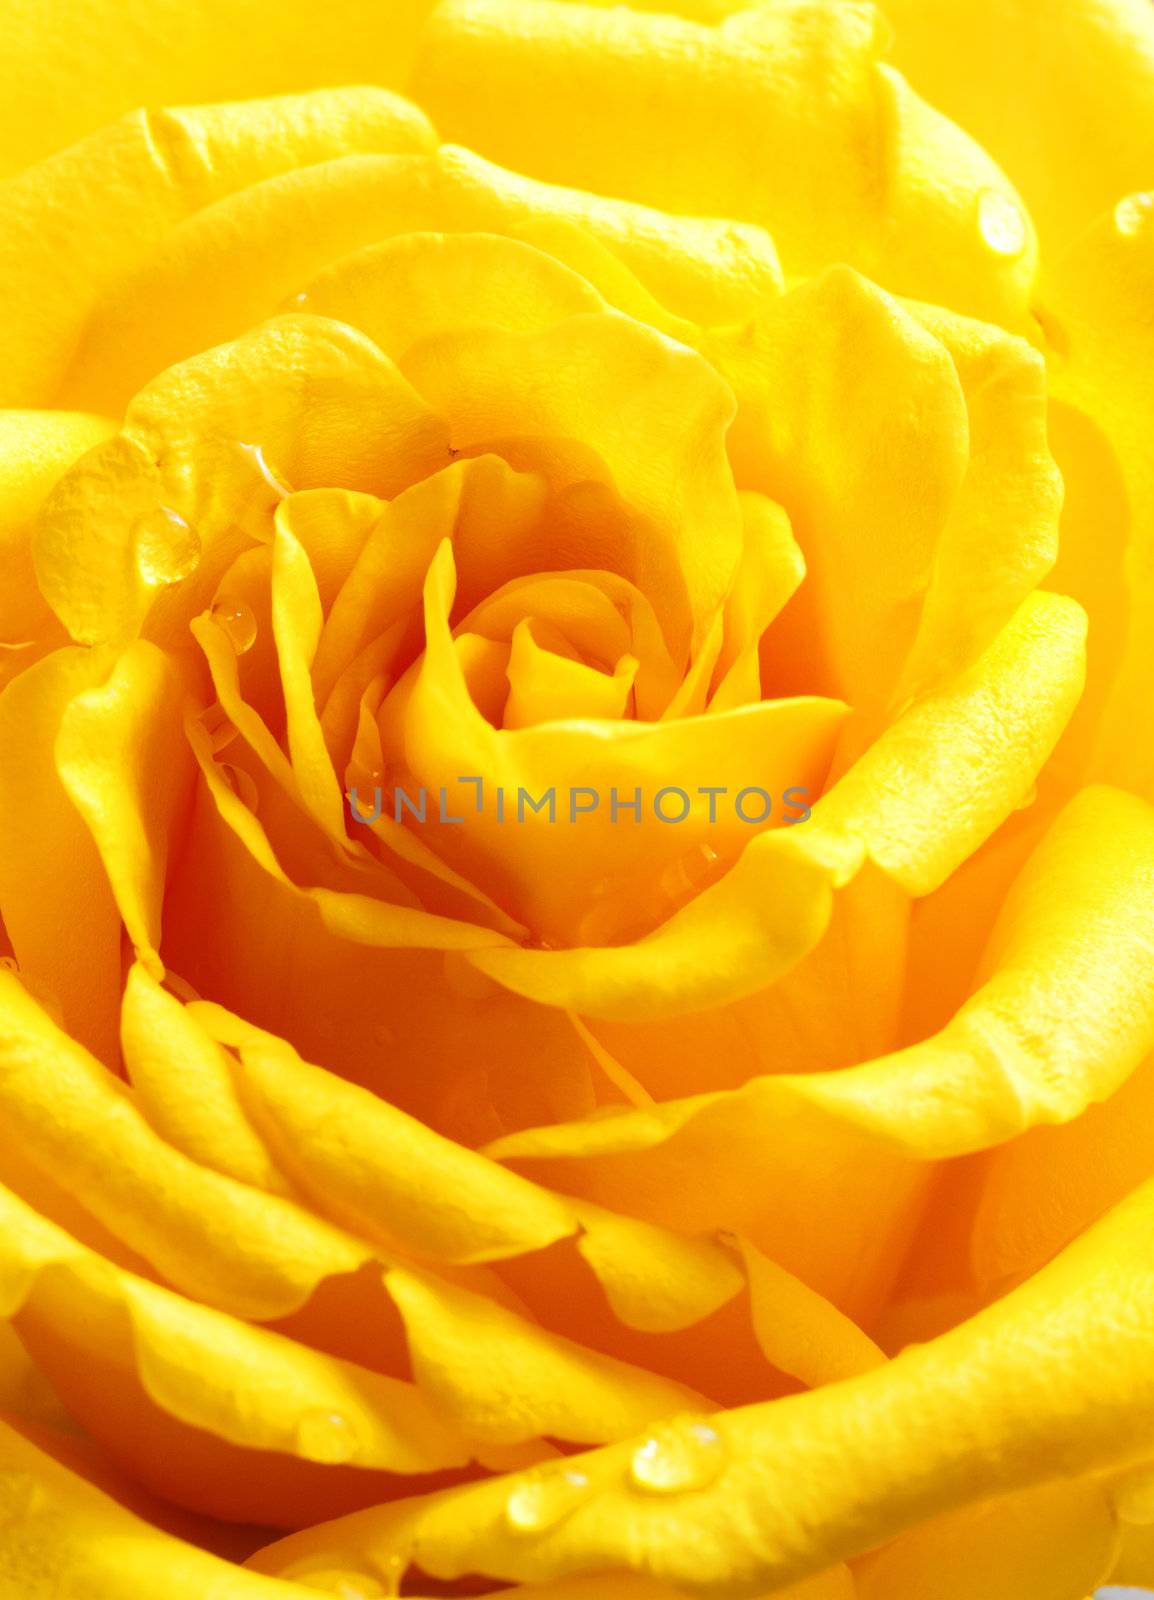 Beautiful yellow rose closeup 